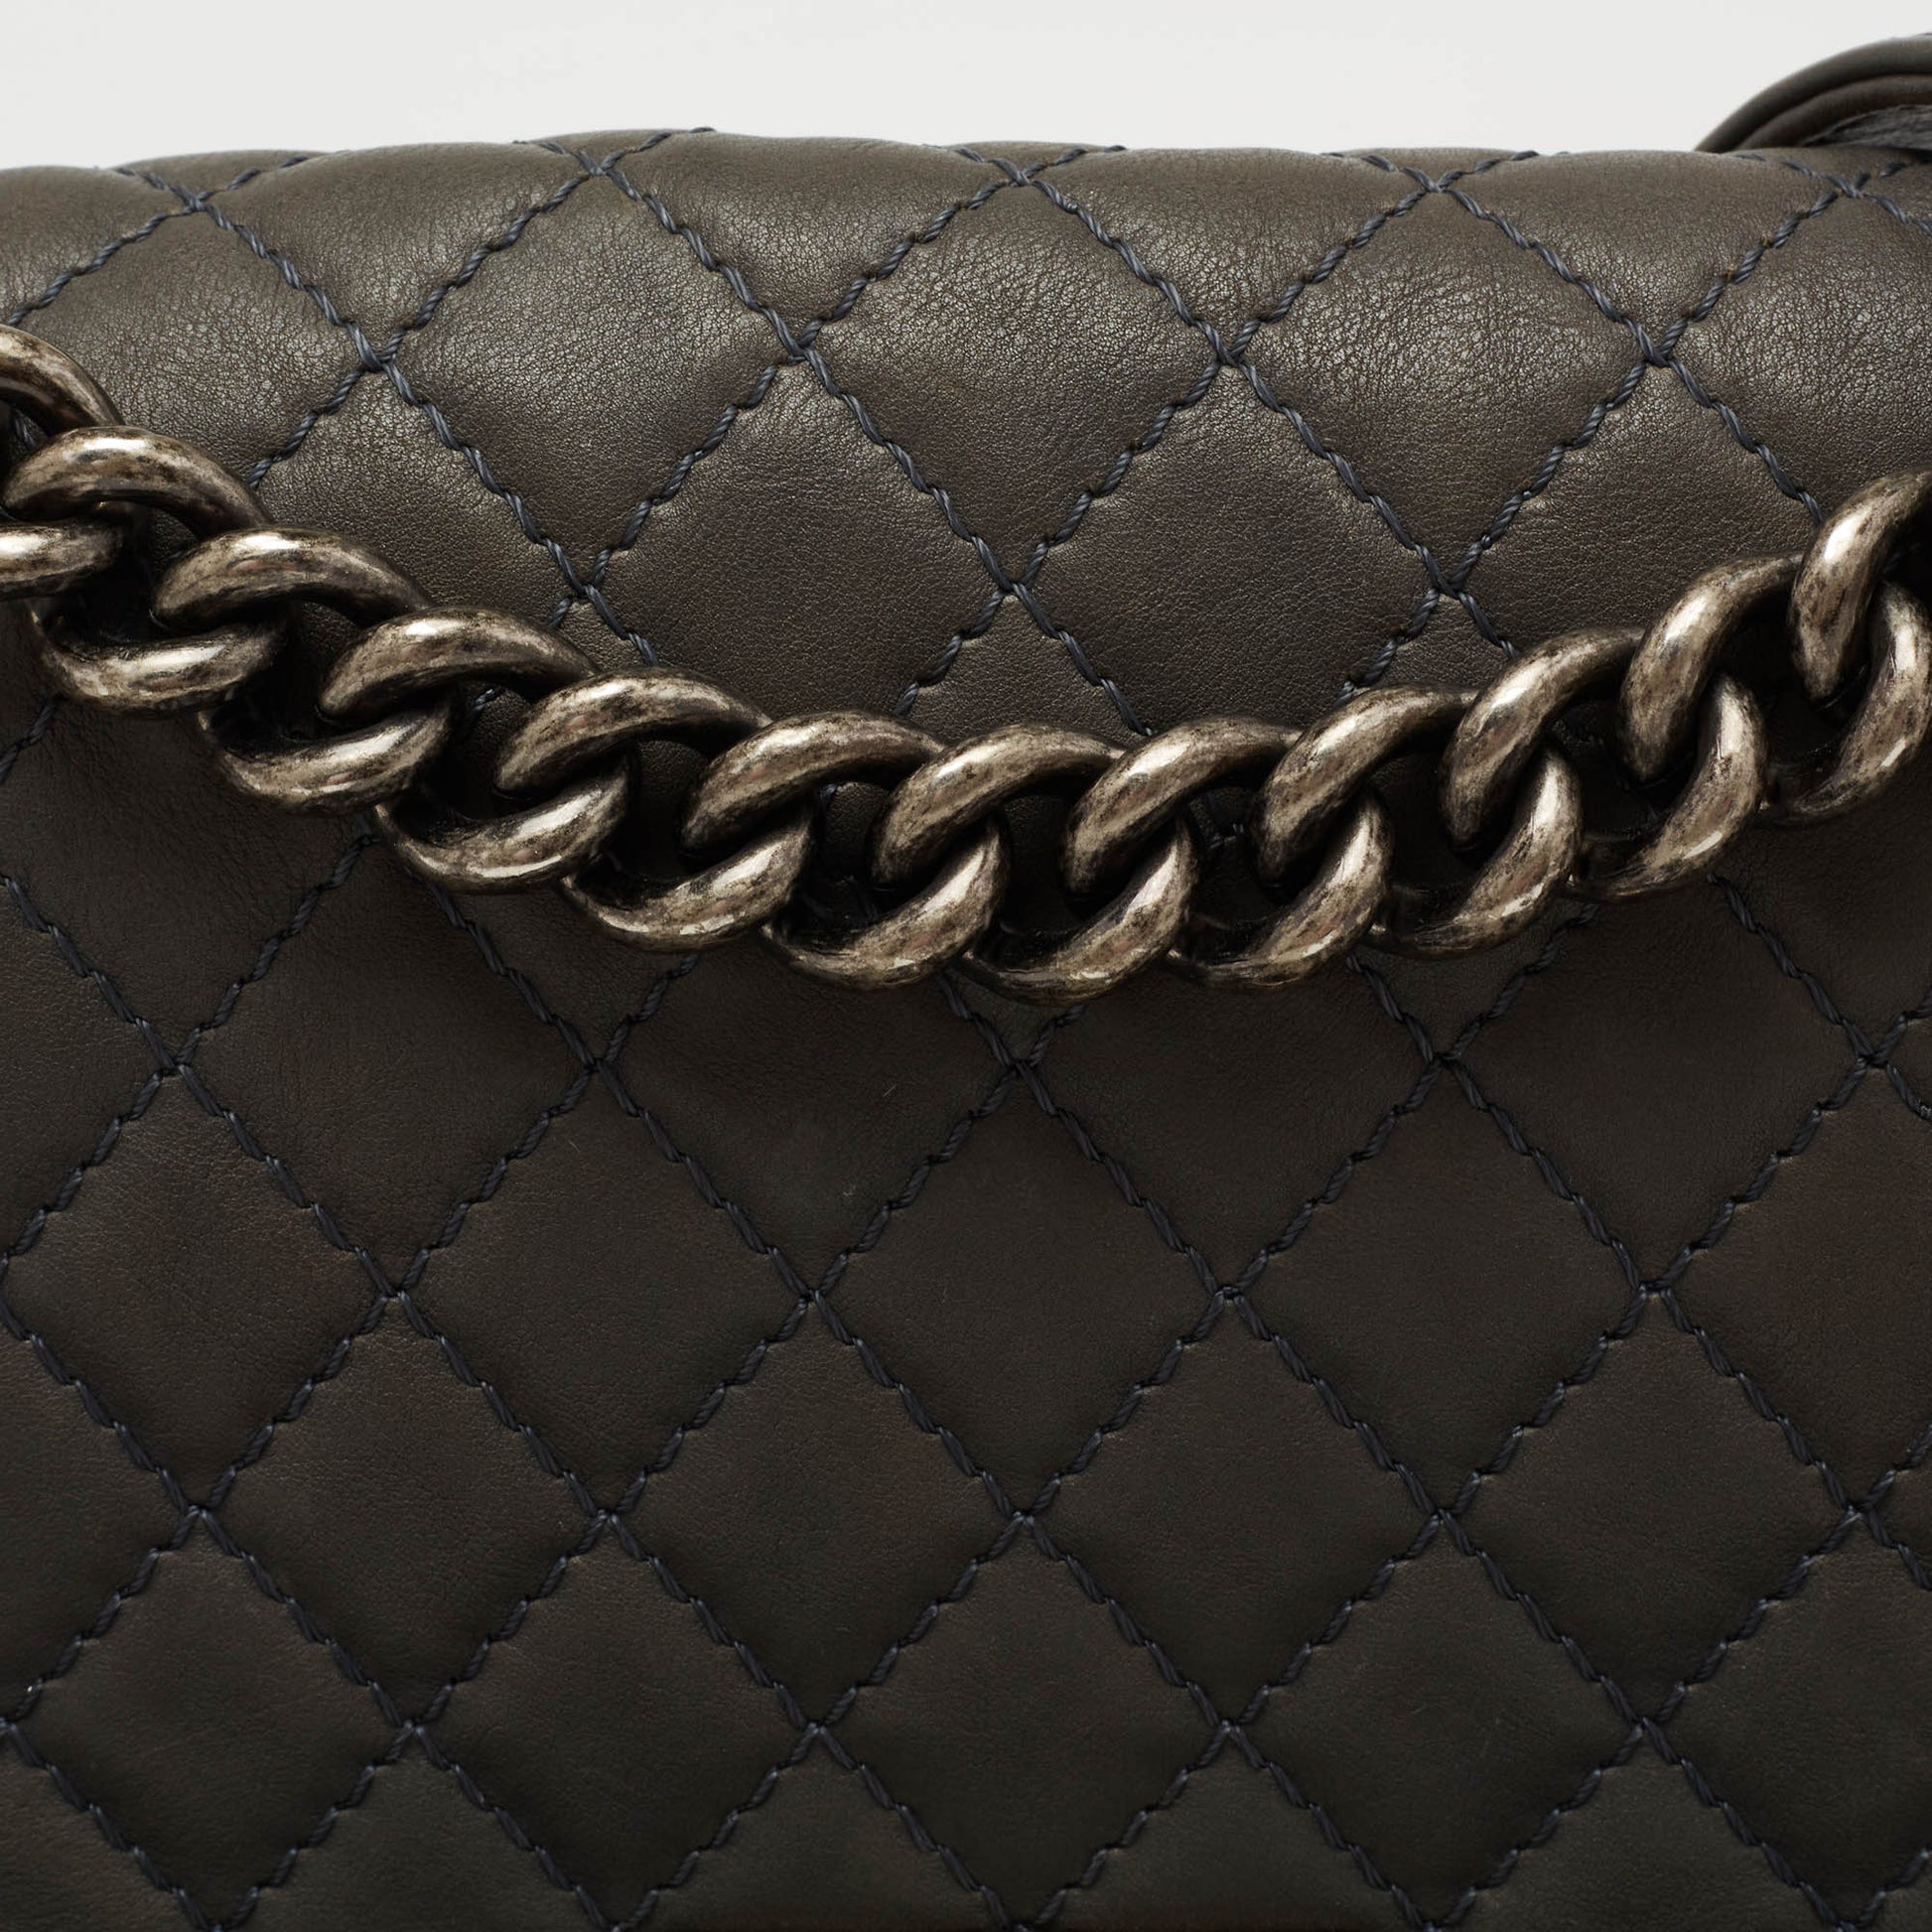 Chanel Grey Quilted Leather Medium Paris Dallas Boy Flap Bag